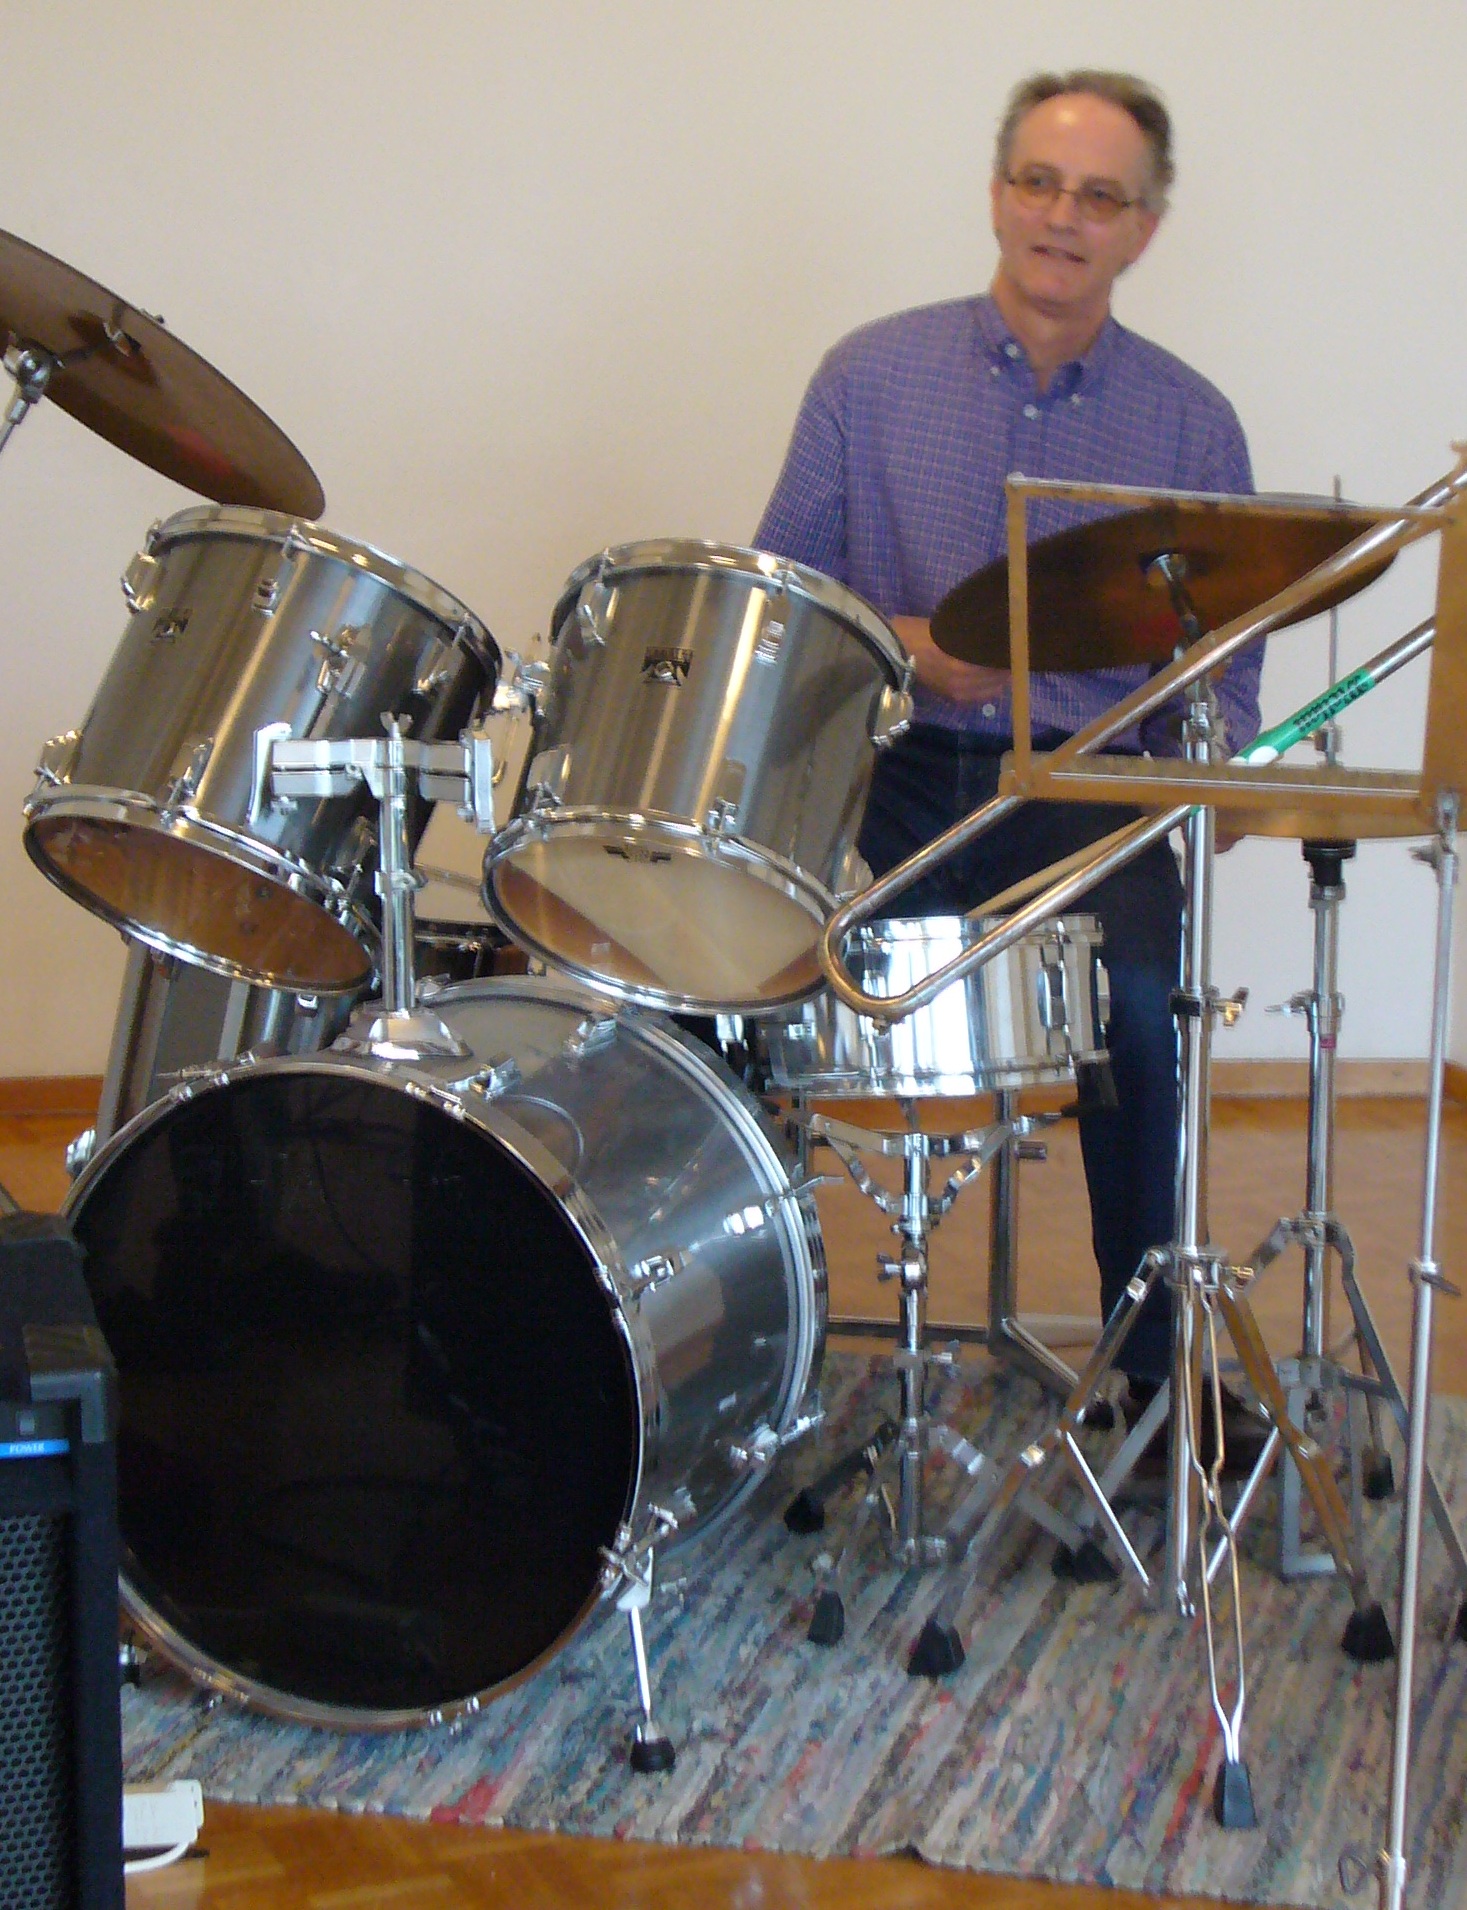 Giorgio on drums